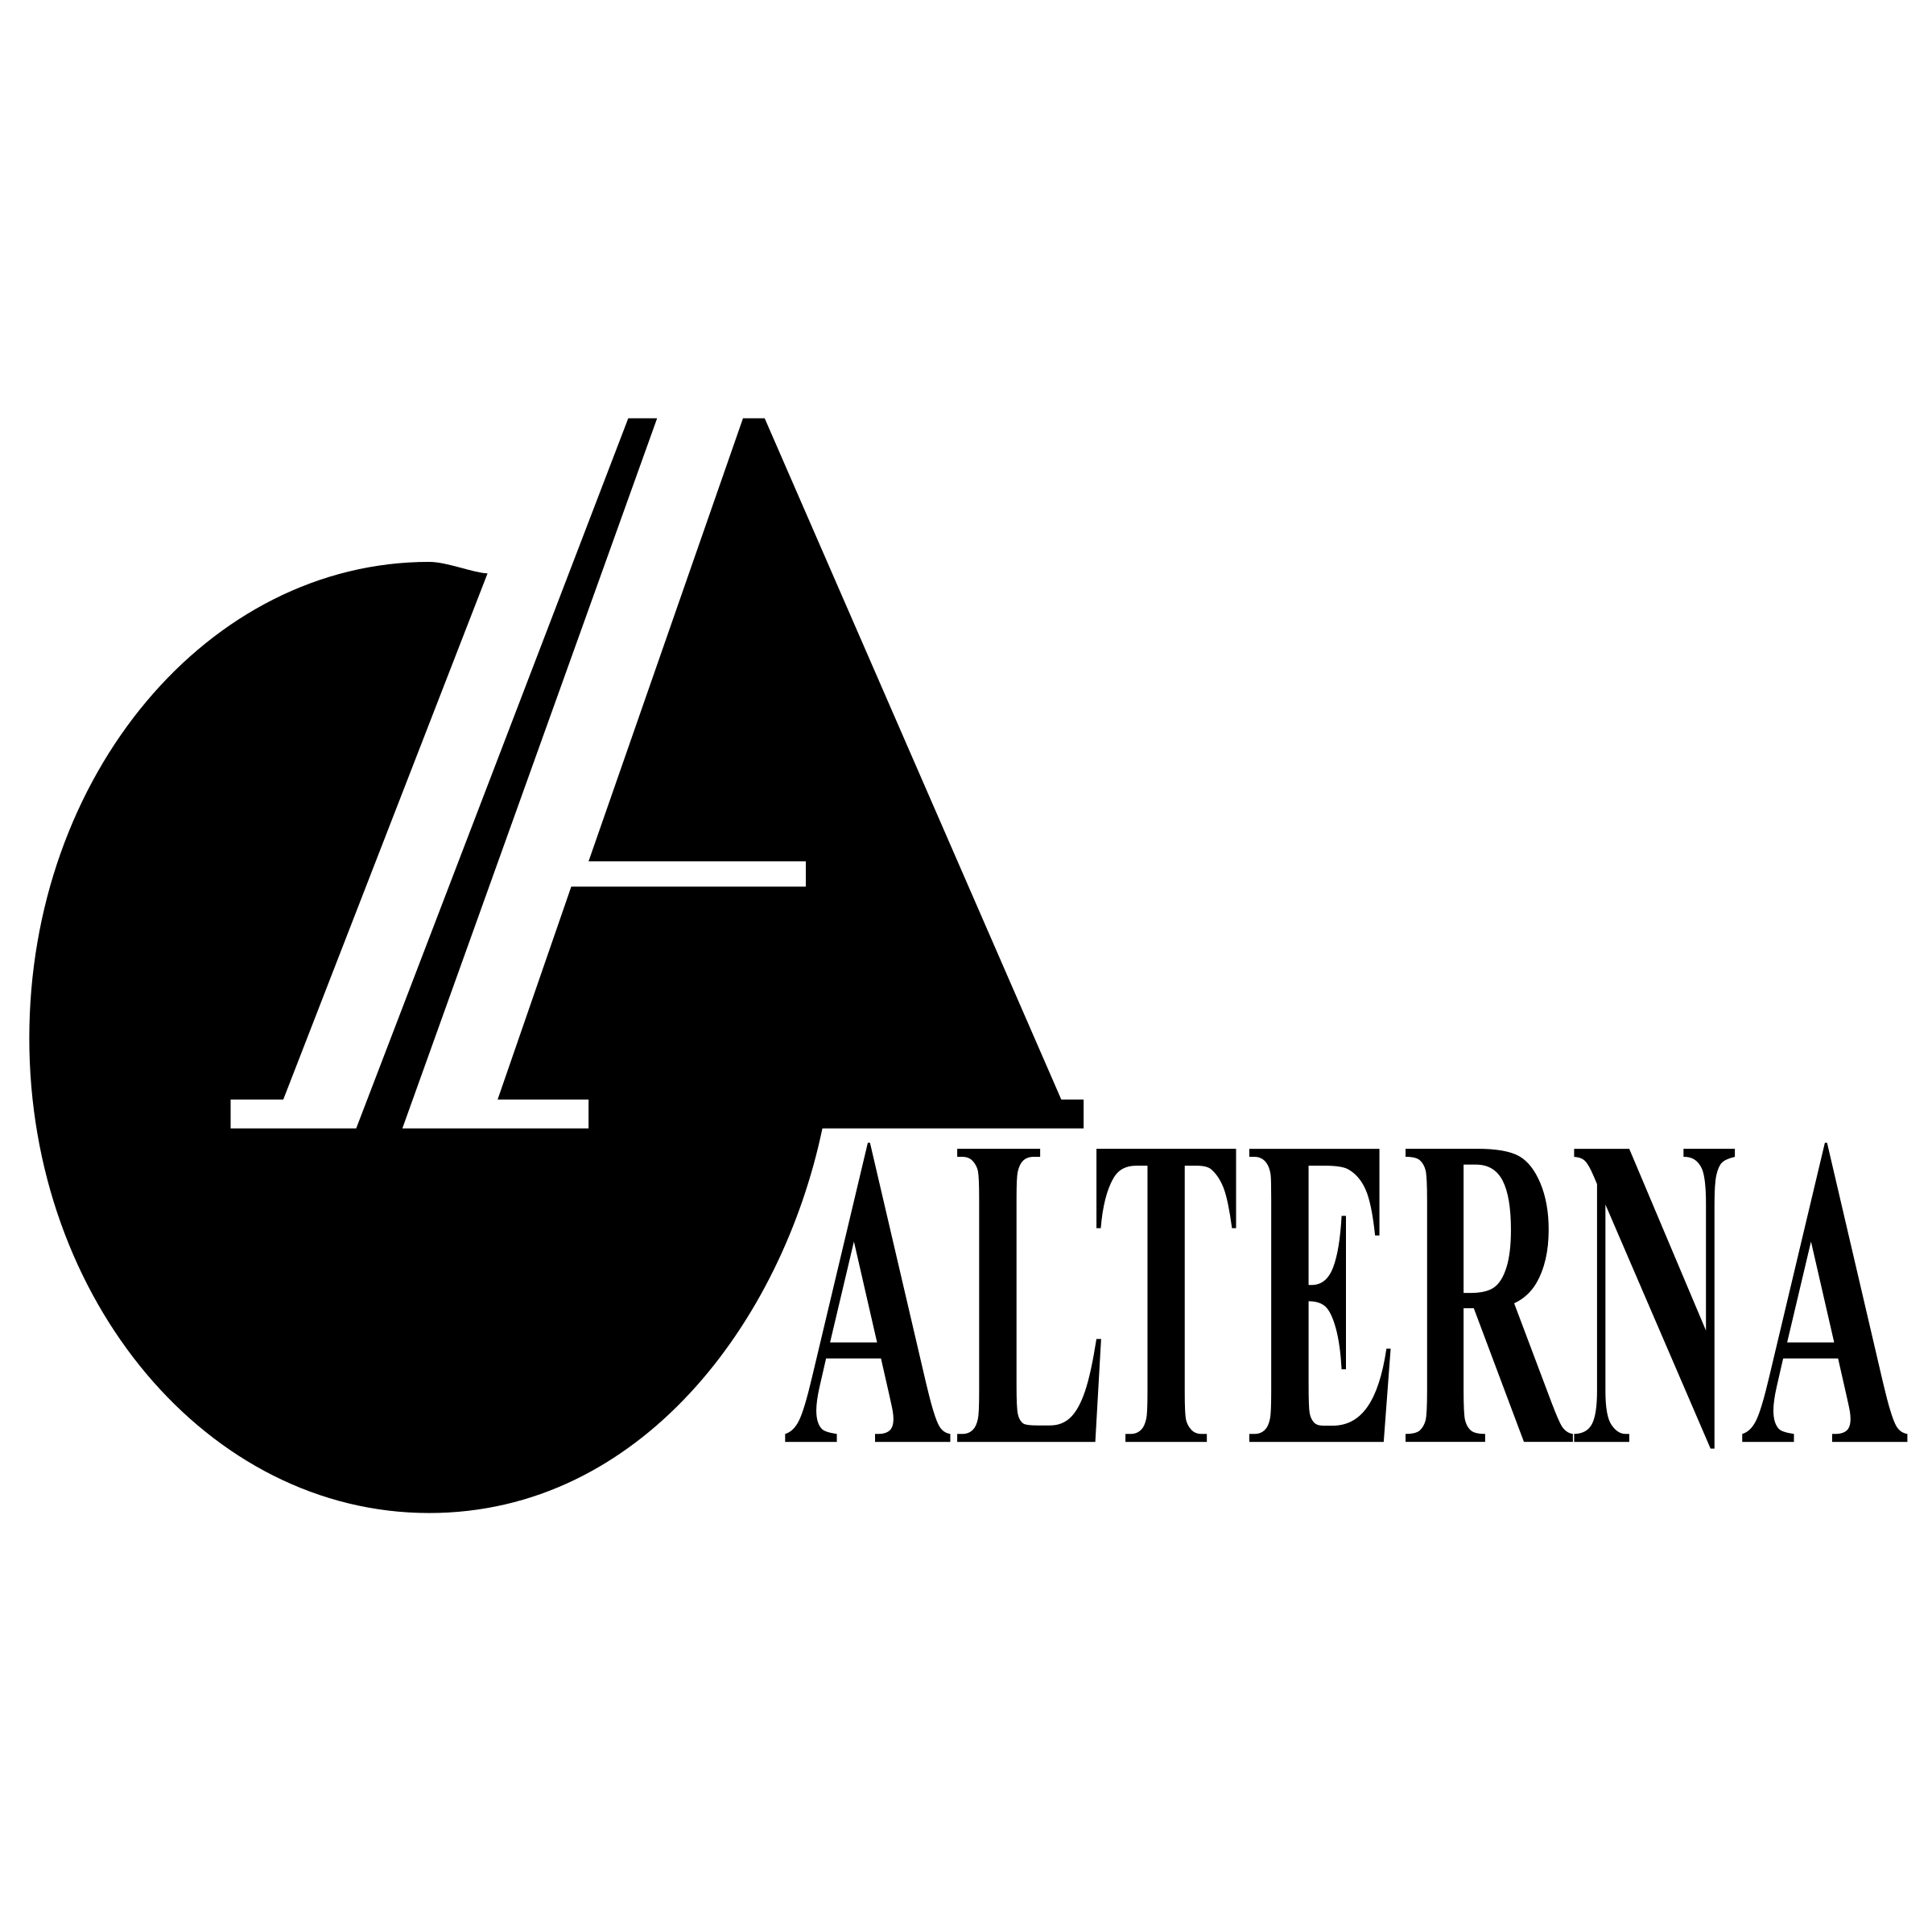 Alterna Logo - Alterna Logo PNG Transparent & SVG Vector - Freebie Supply